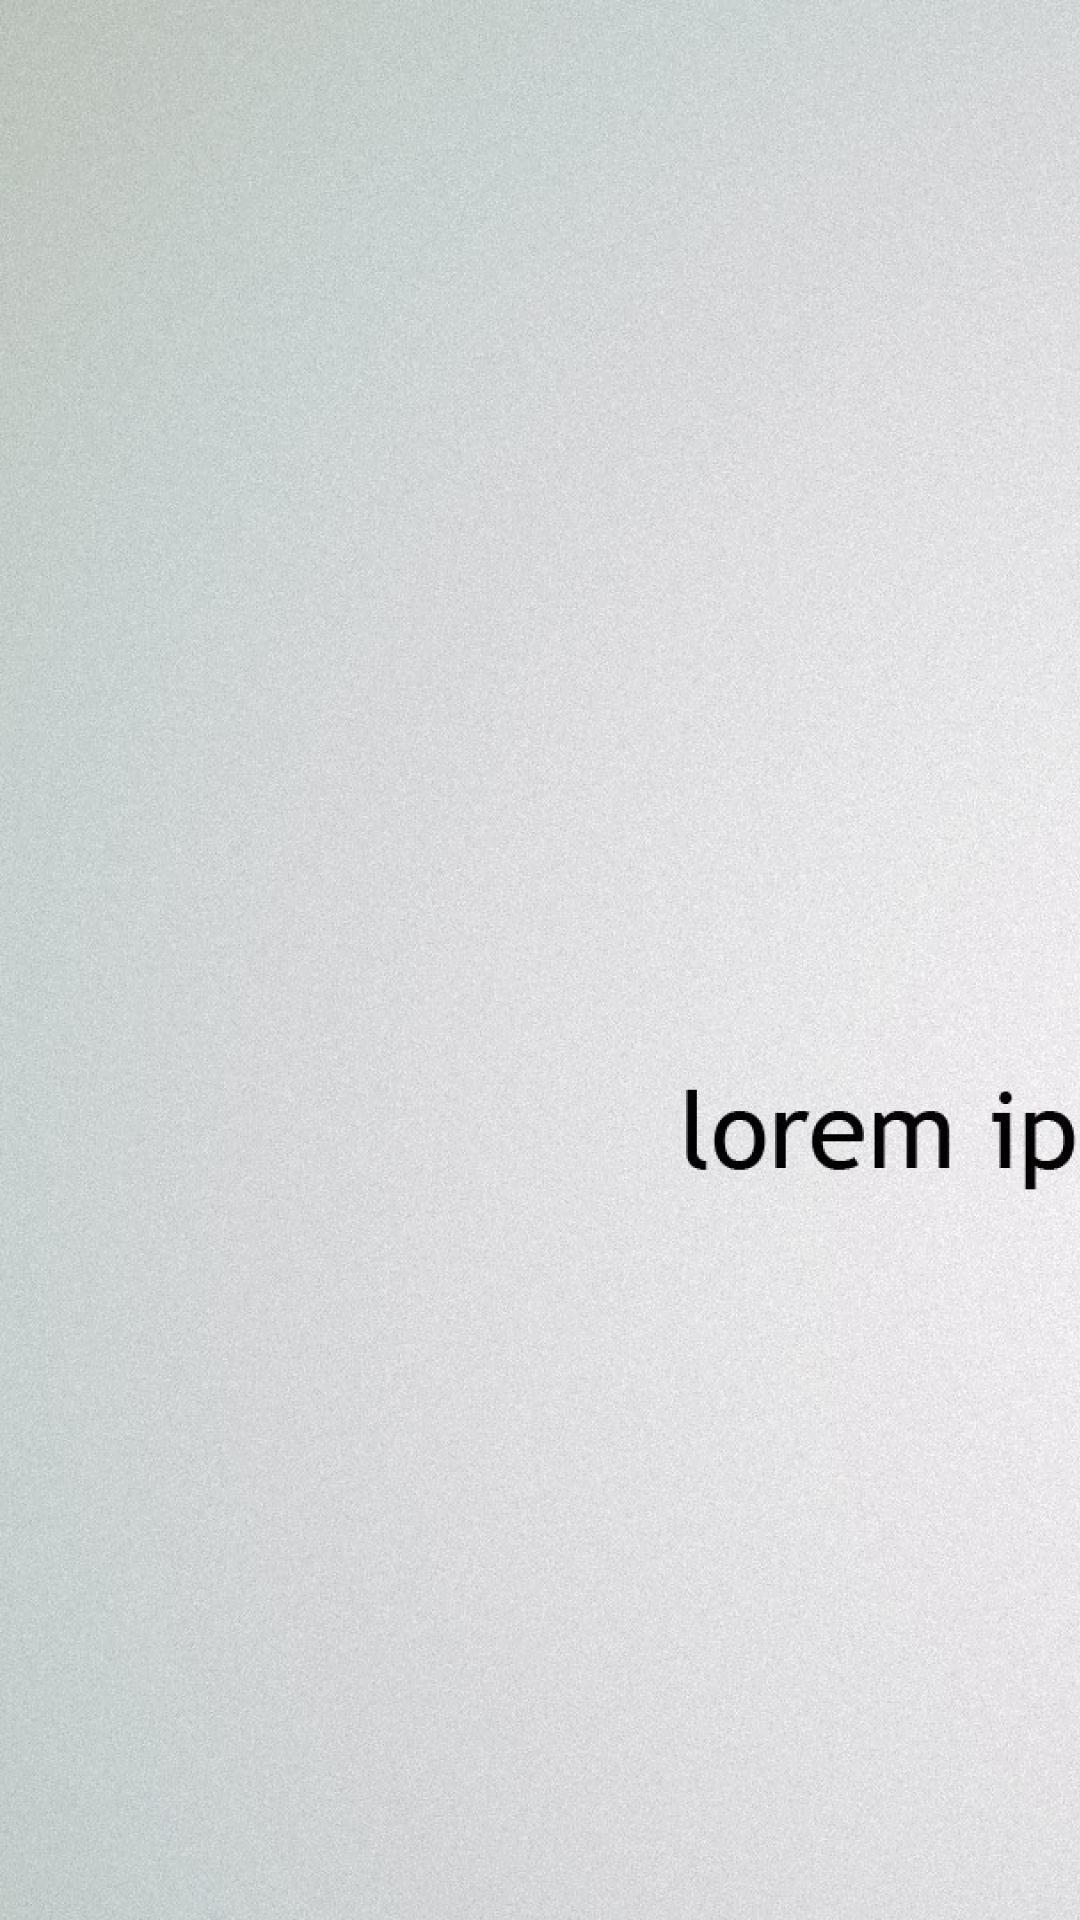 Citation lorem ipsum latin minimalistic phrase Wallpaper